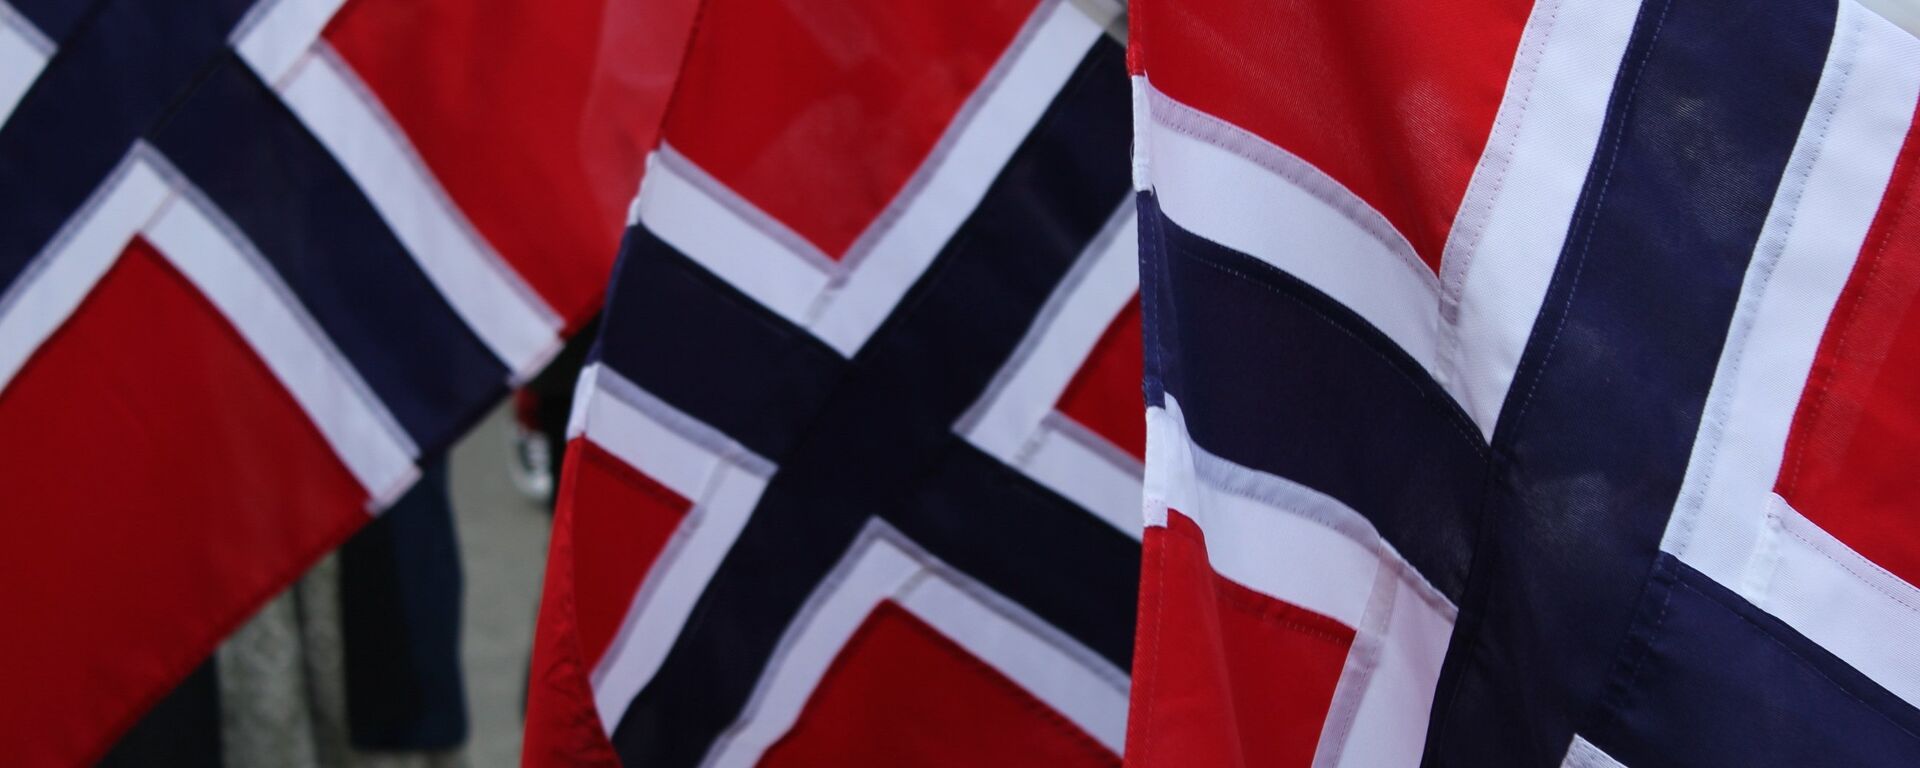 Bandera de Noruega - Sputnik Mundo, 1920, 26.09.2021